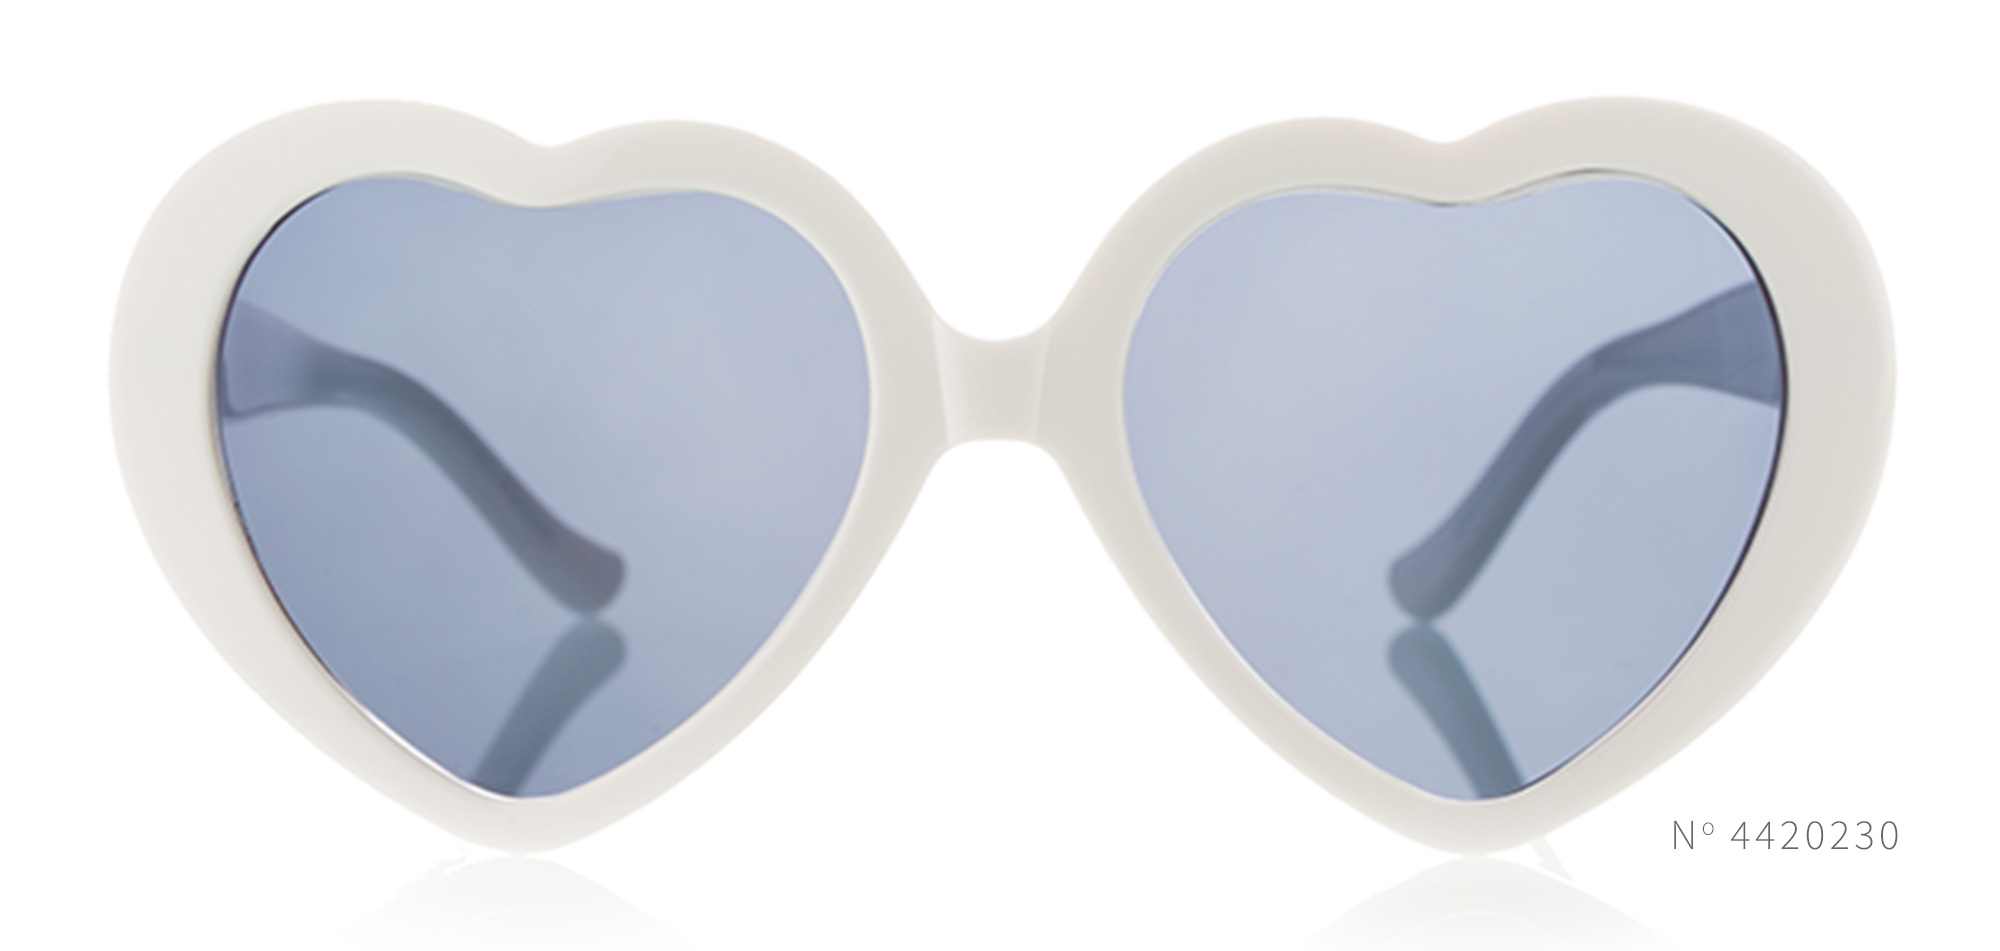 White Heart Shaped Sunglasses